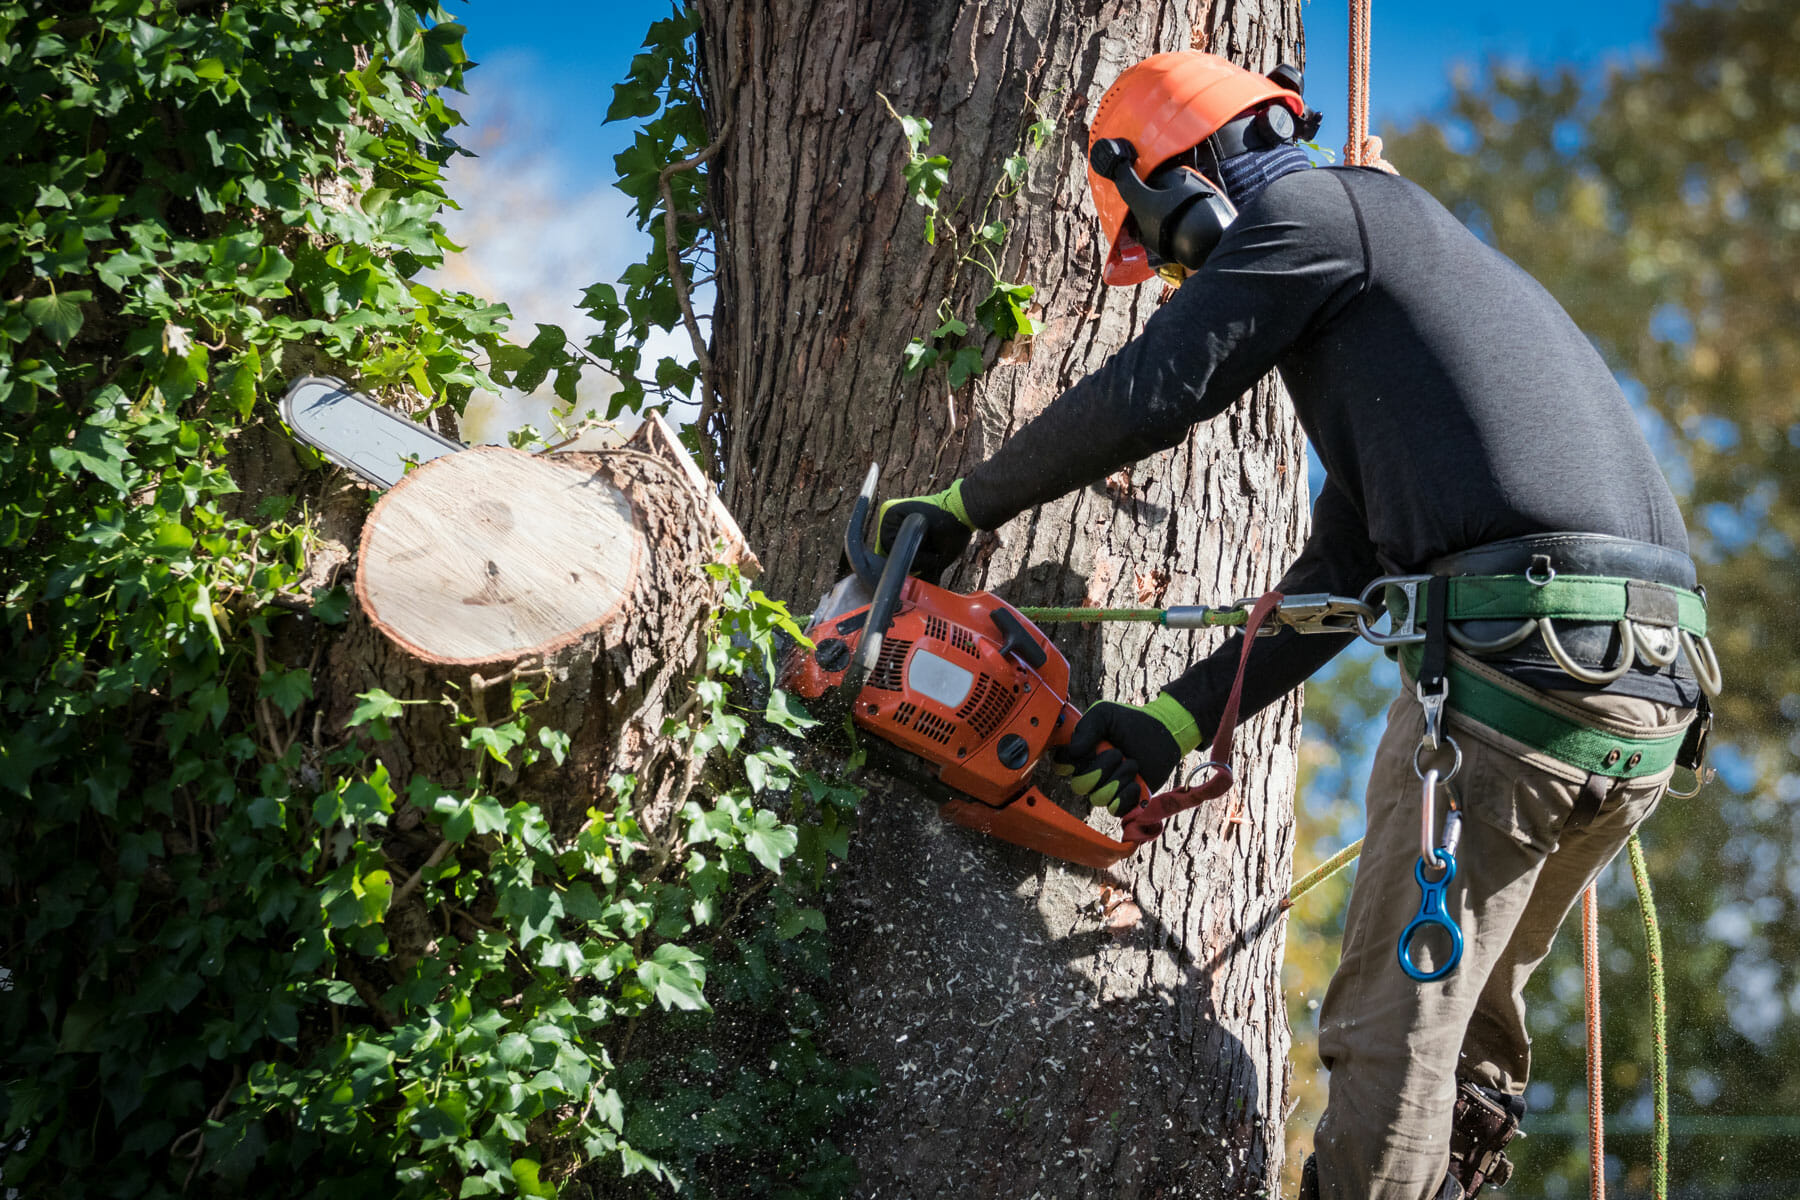 Professional tree care - arborist uses chainsaw to trim tree